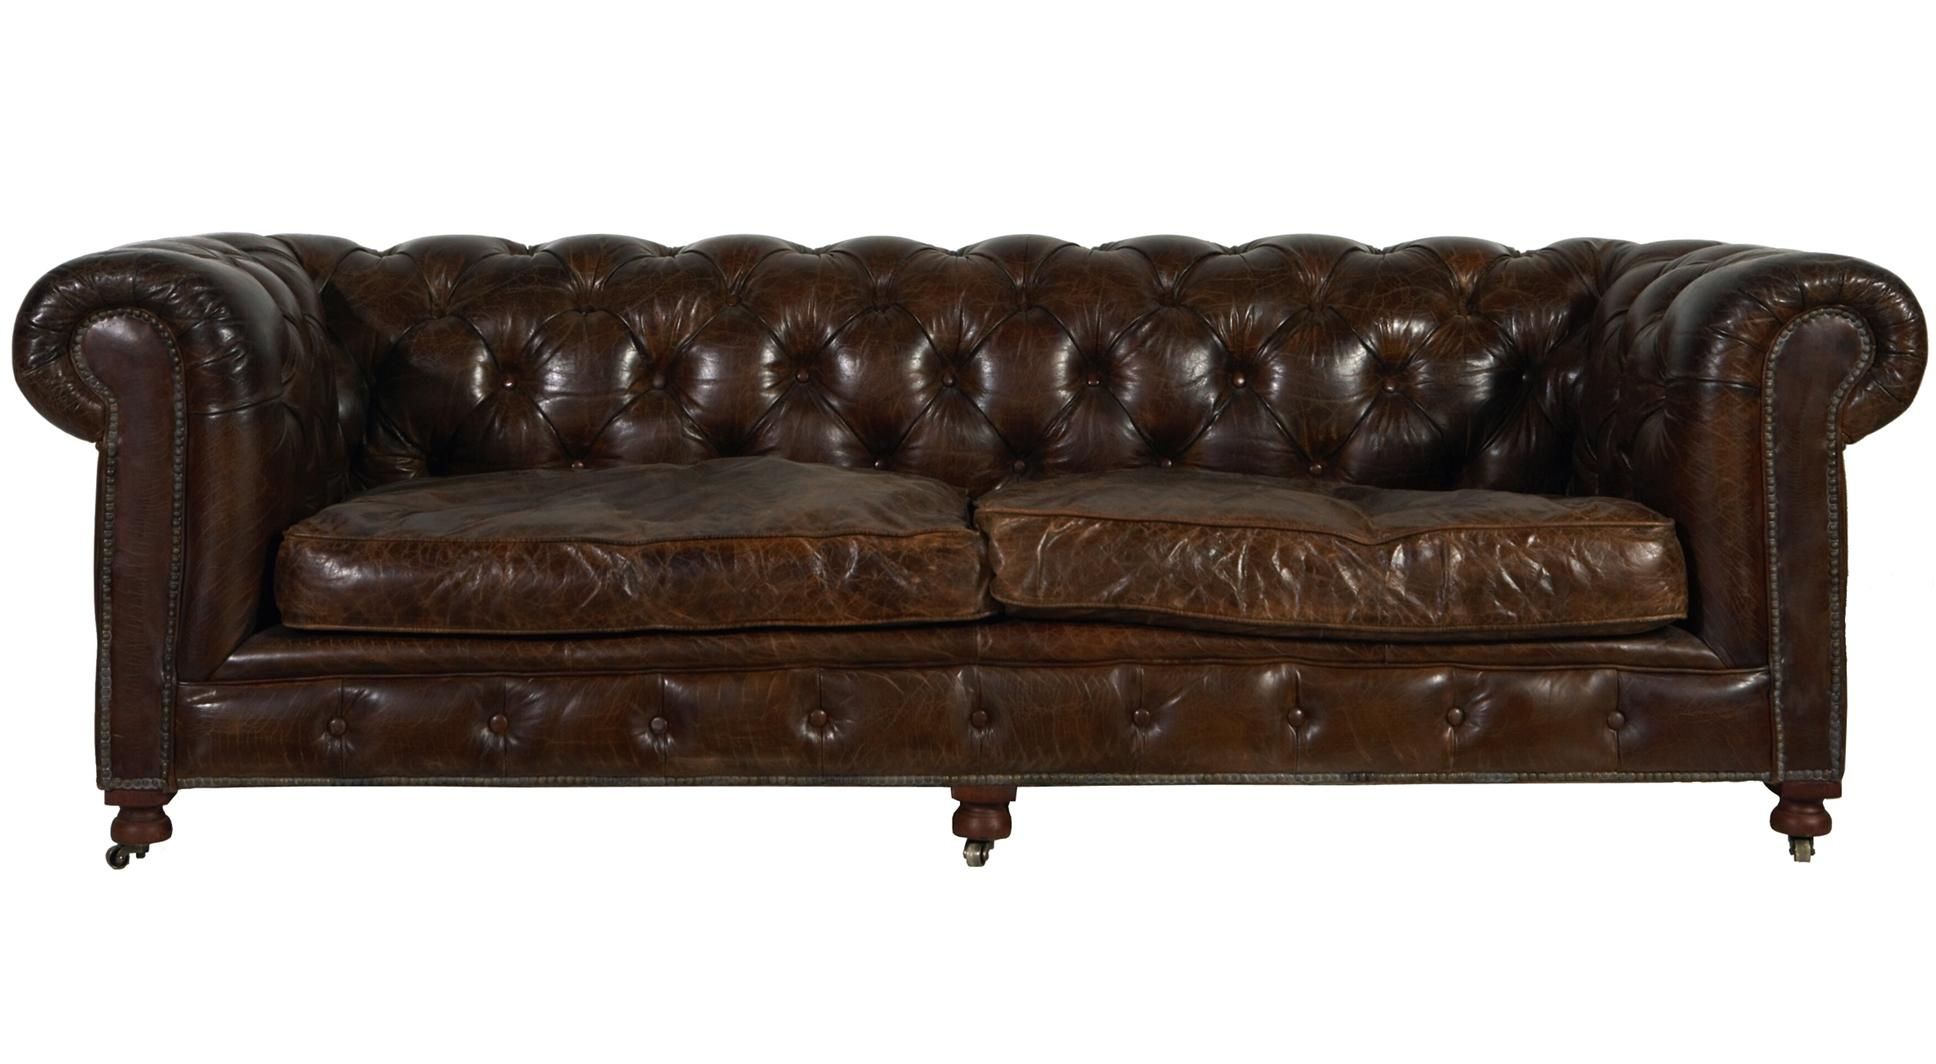 Craigslist Leather Sofa With Design Hd Pictures 16885 | Kengire Inside Craigslist Leather Sofa (View 18 of 20)